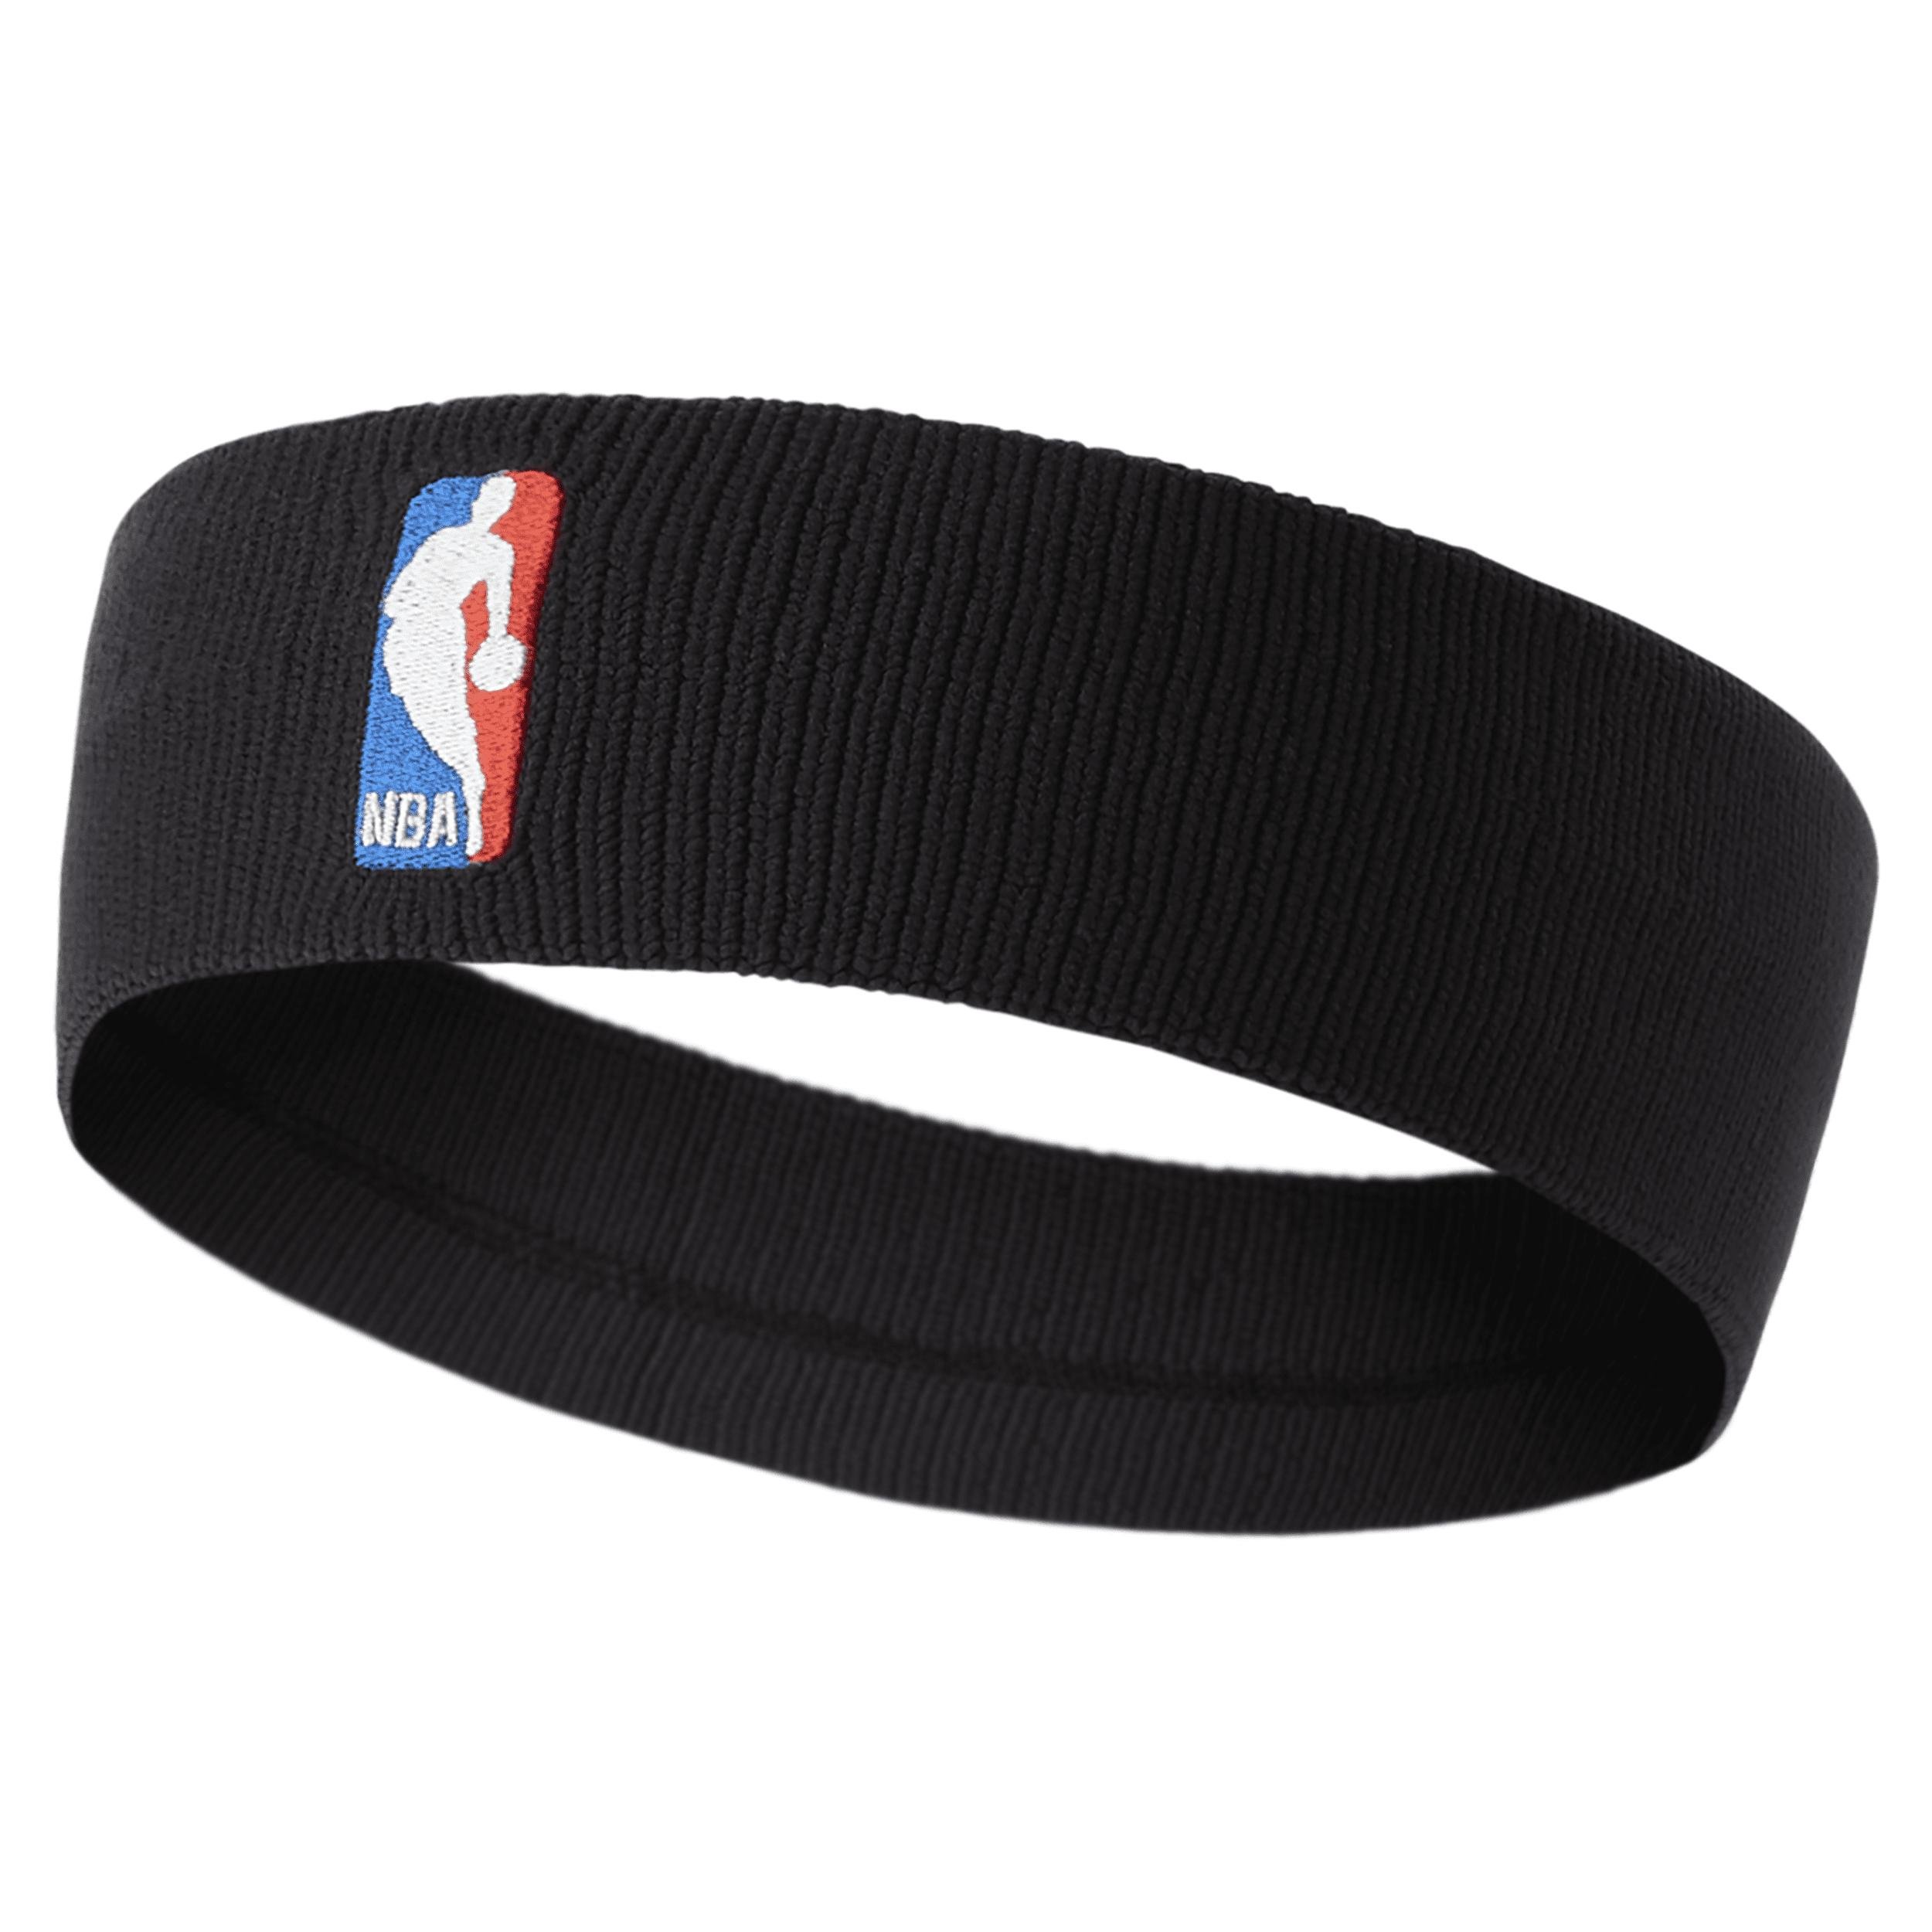 Nike Unisex NBA Headband by NIKE